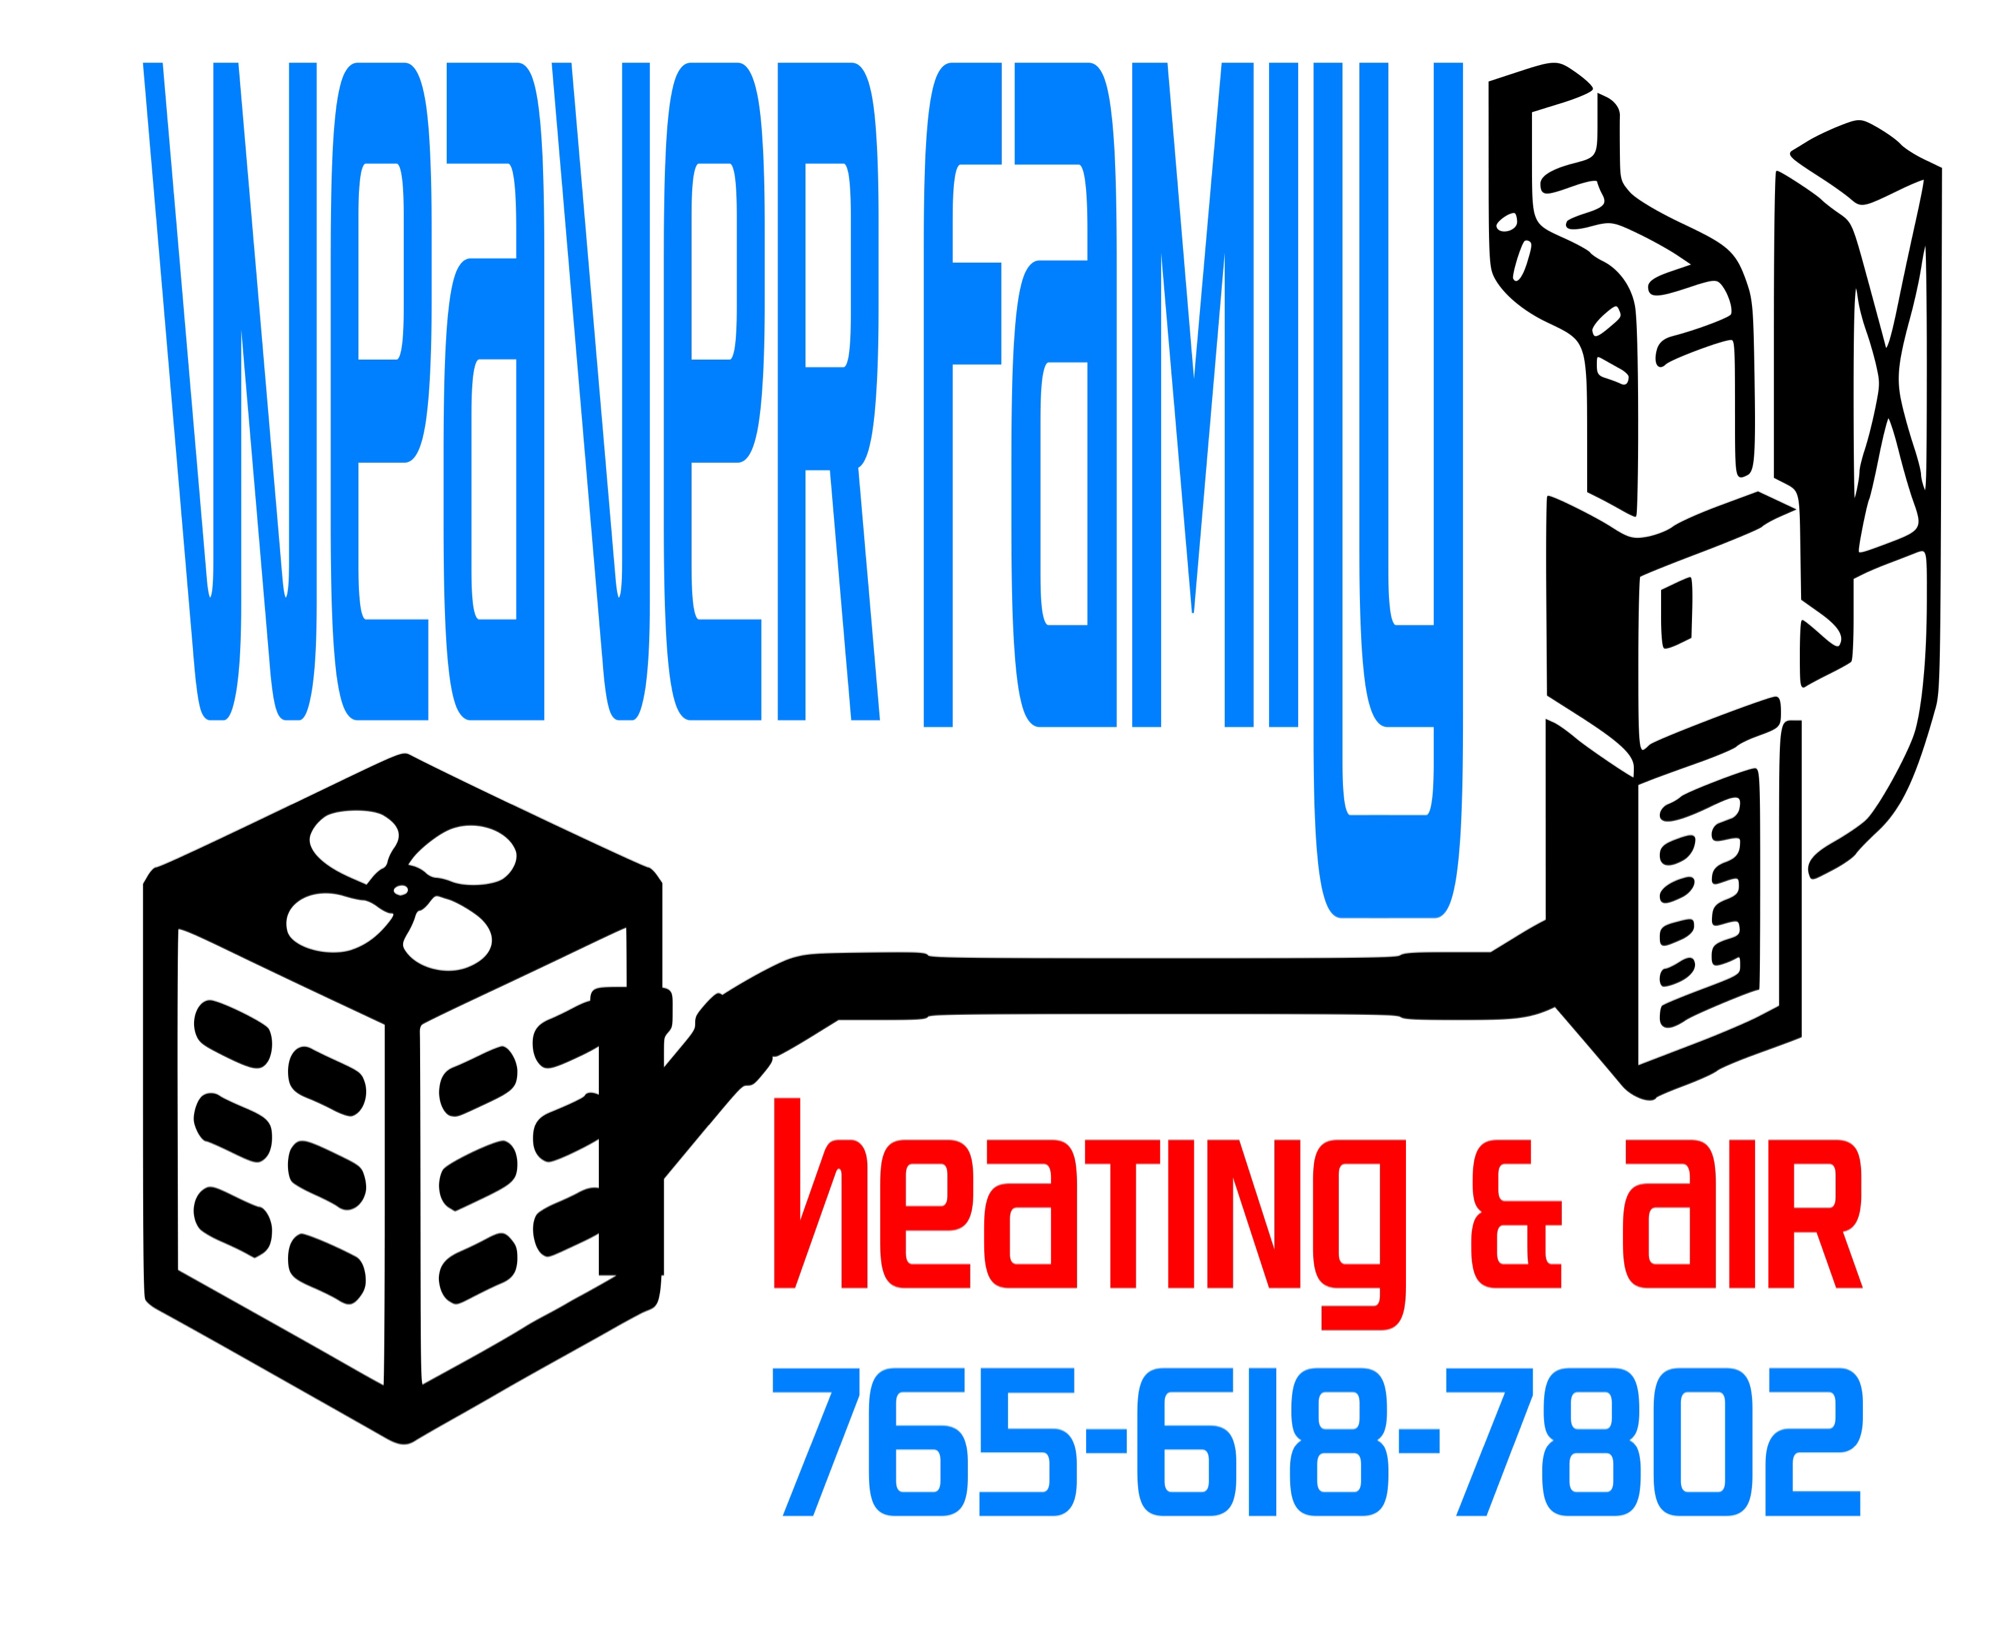 Weaver Family Heating and Air, LLC Logo